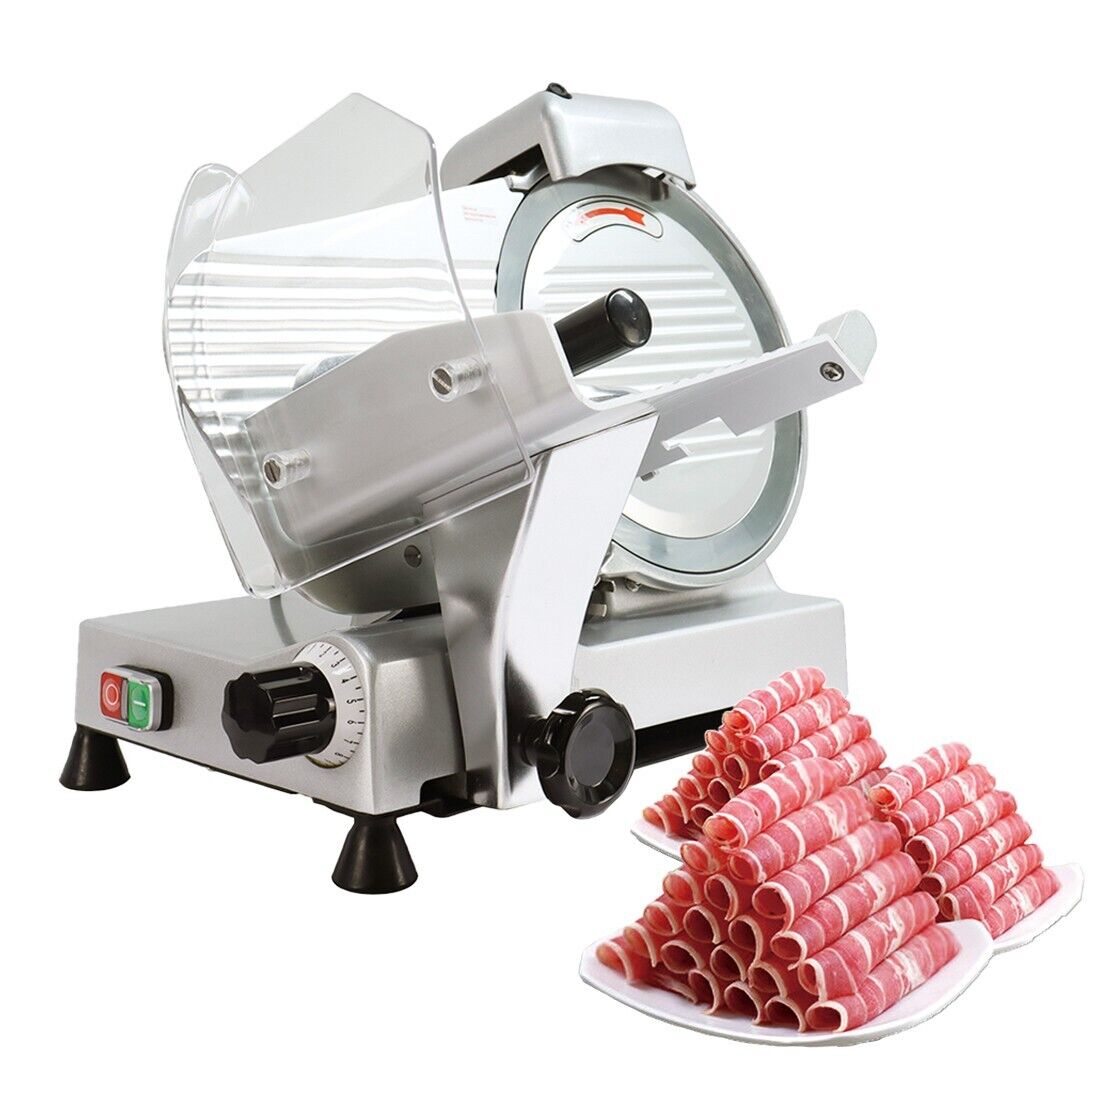 Kolice Semi-Automatic Meat Slicer Electric Deli Food Slicer-240W, 10\'\' Blade